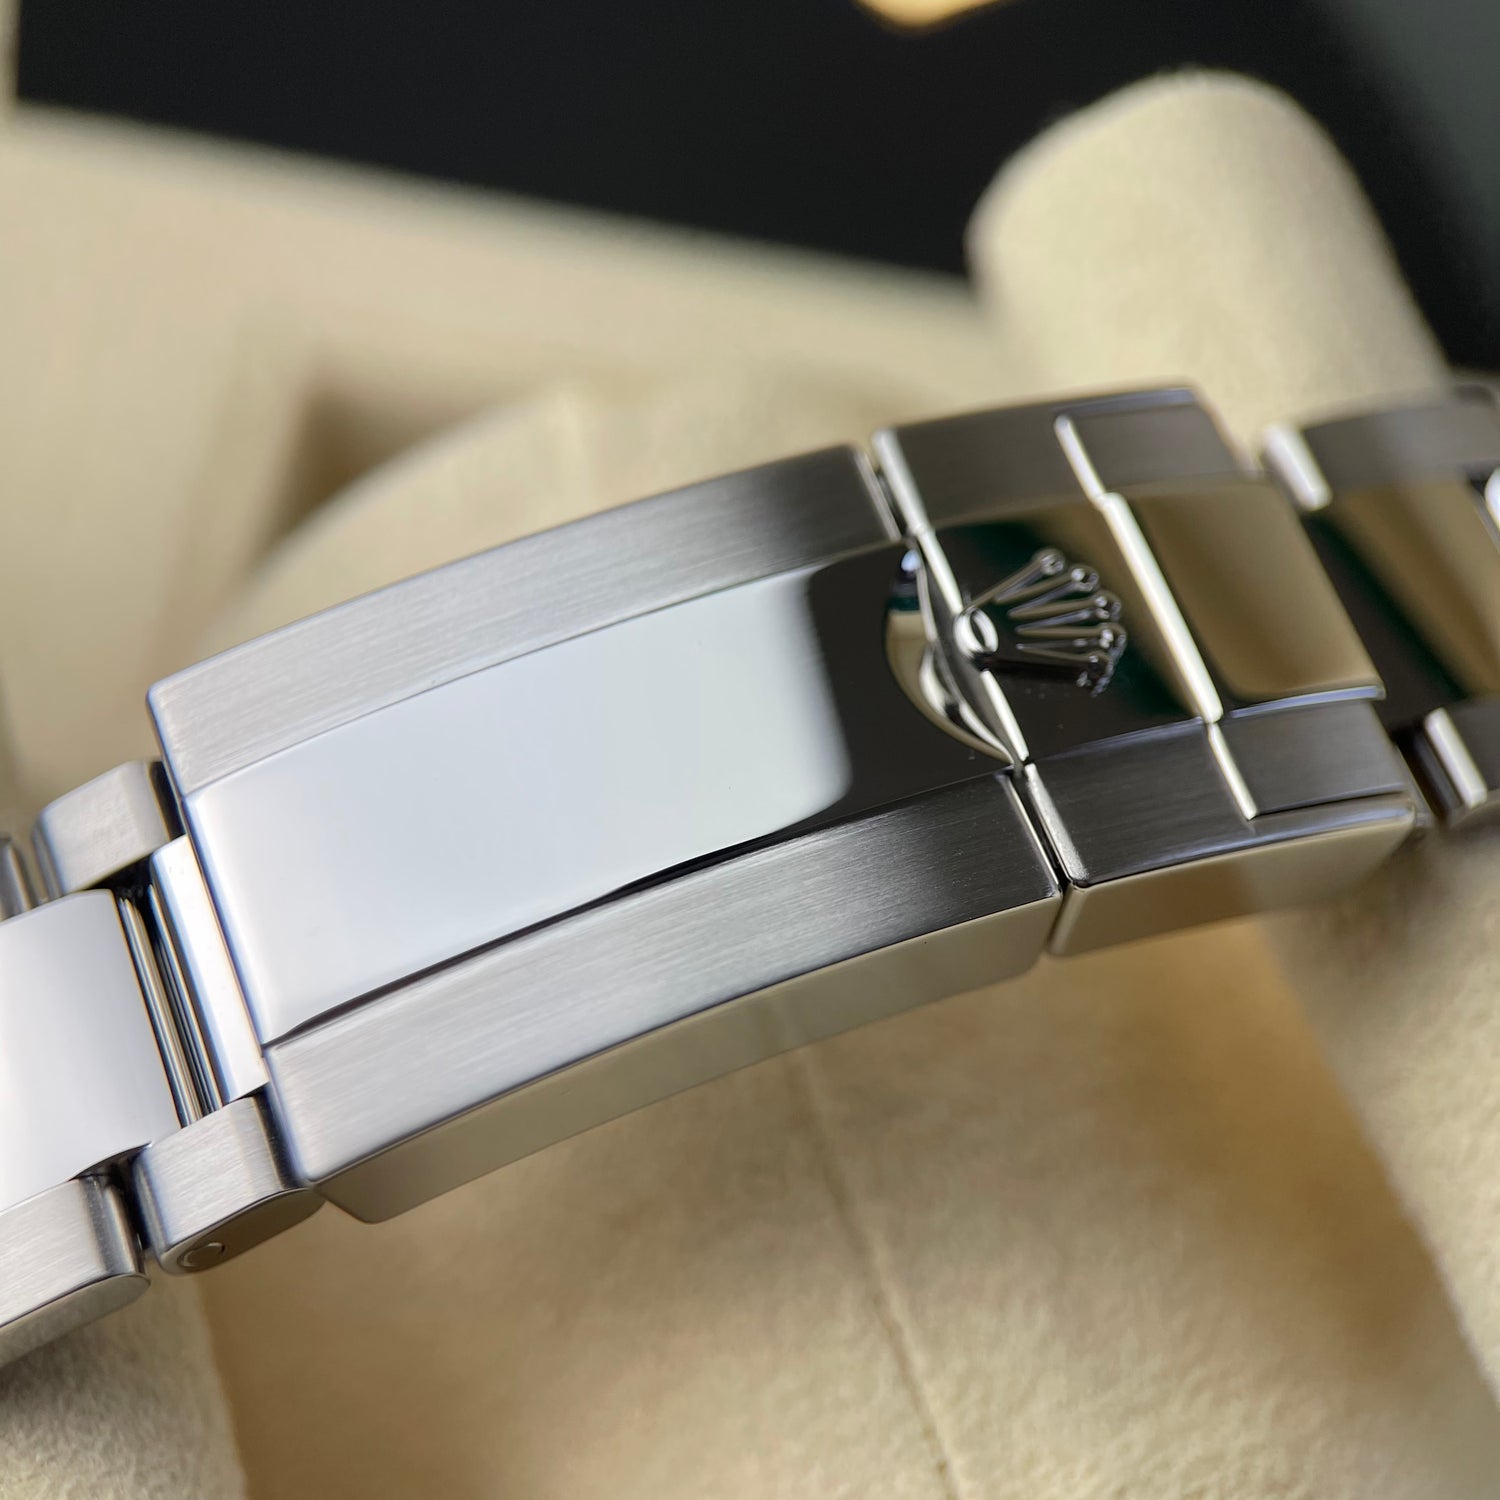 Rolex Cosmograph Daytona Ceramic White 'Panda' Dial 116500LN 2021 Full Set Watch